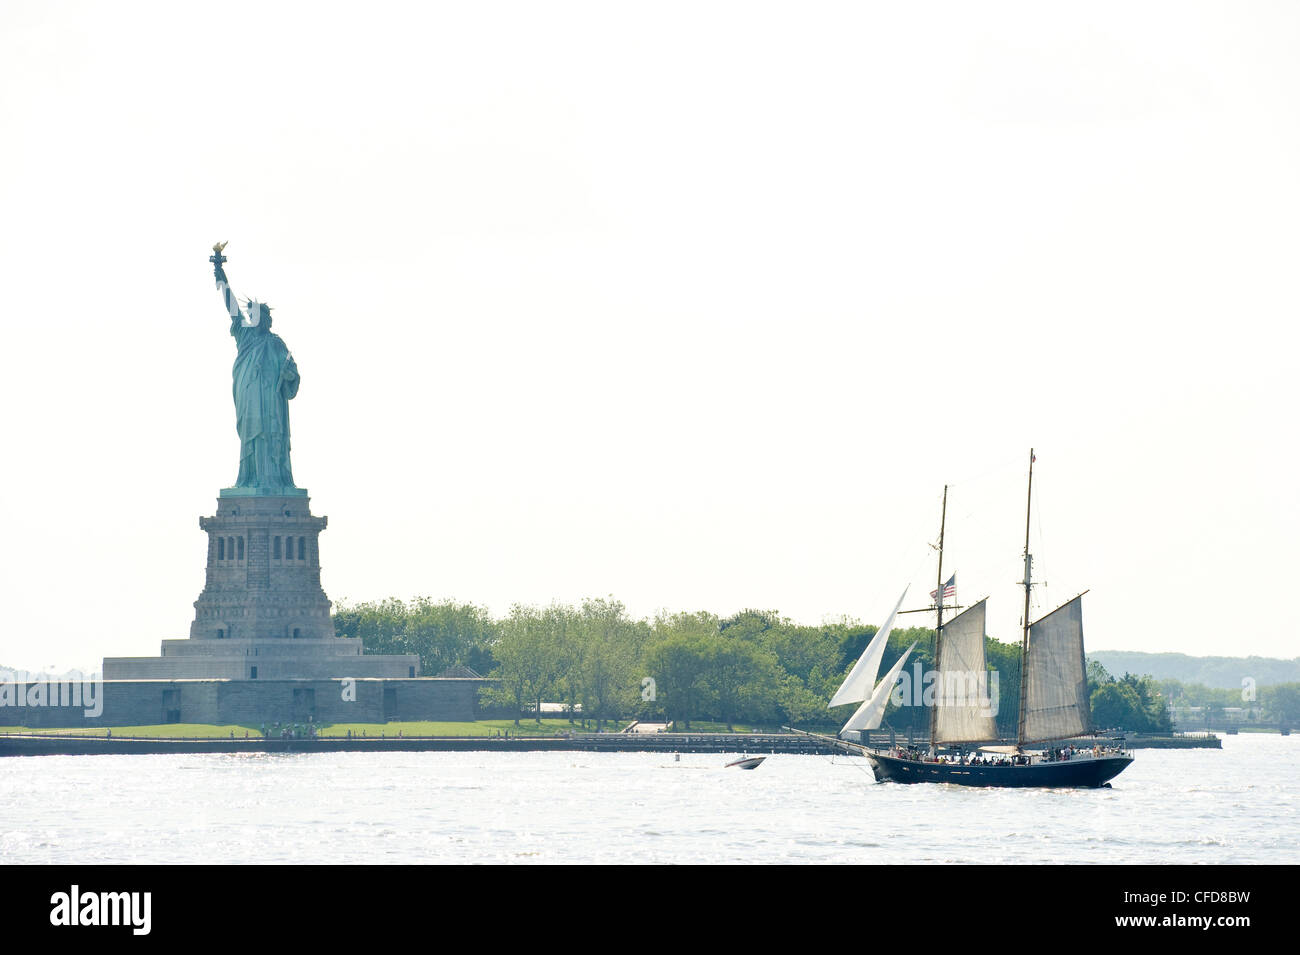 Statue of Liberty and old sailing ship, New York, USA Stock Photo